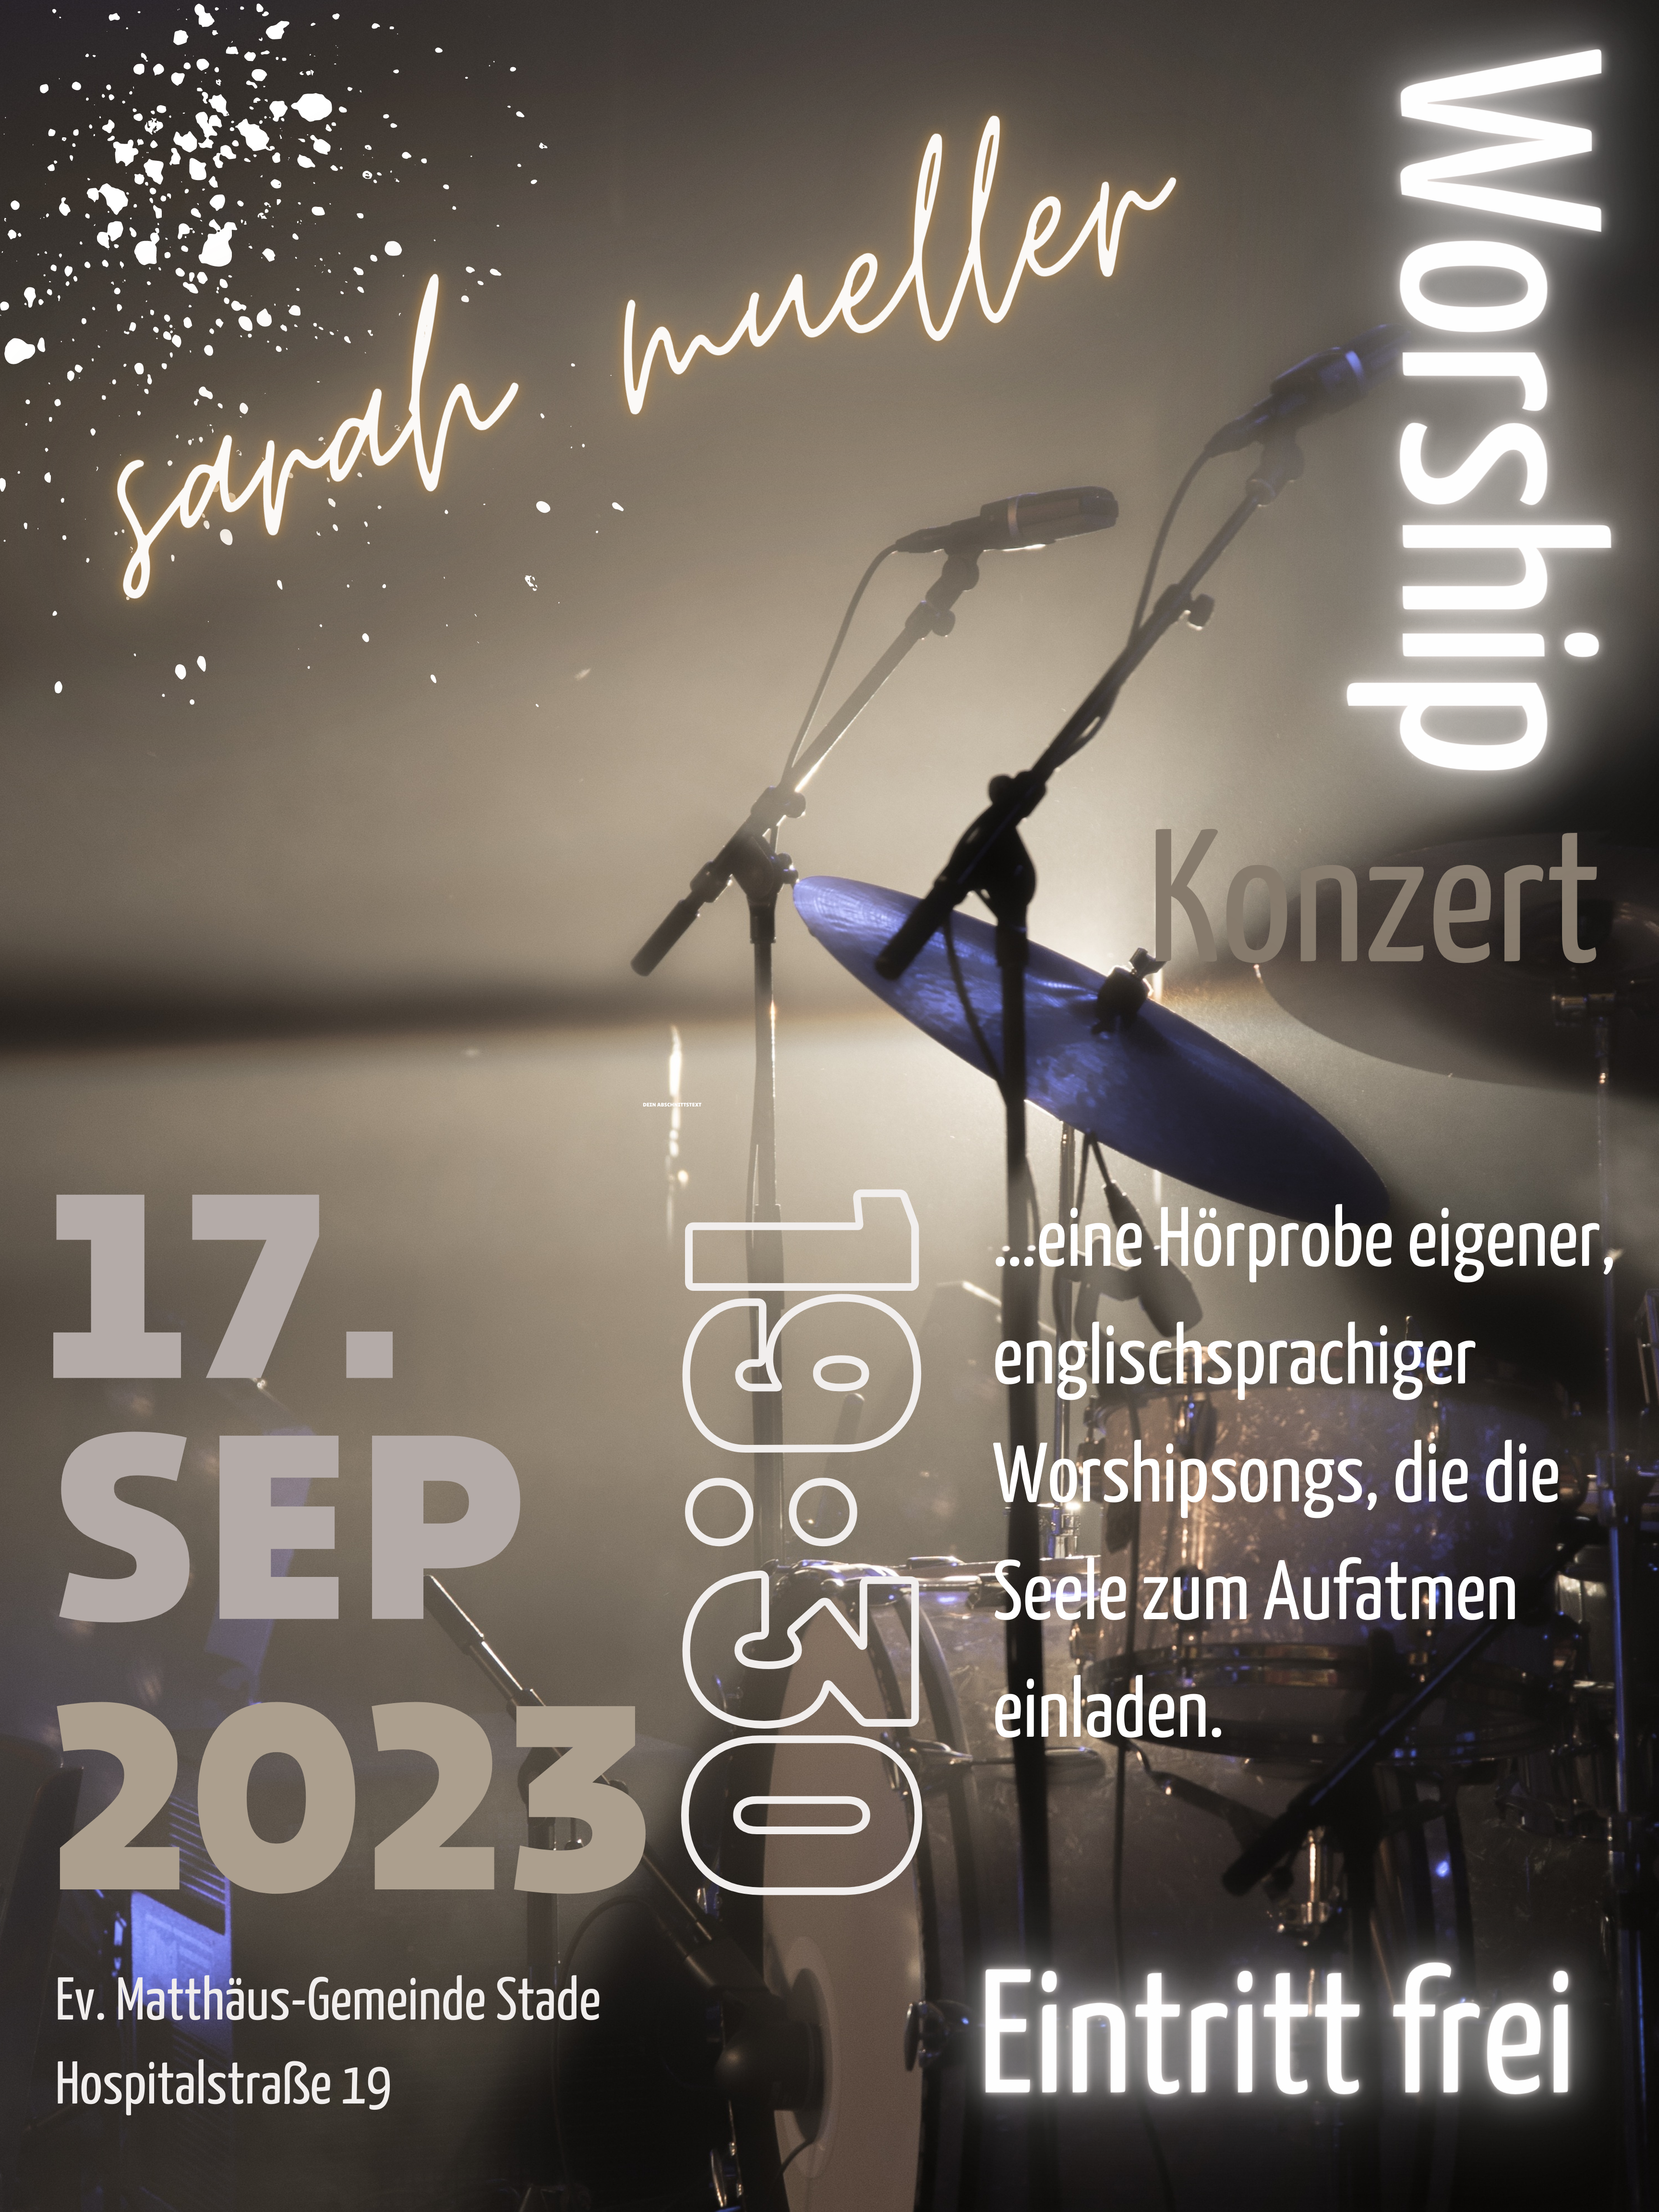 Worship Konzert mit Sarah Müller am 17.09.